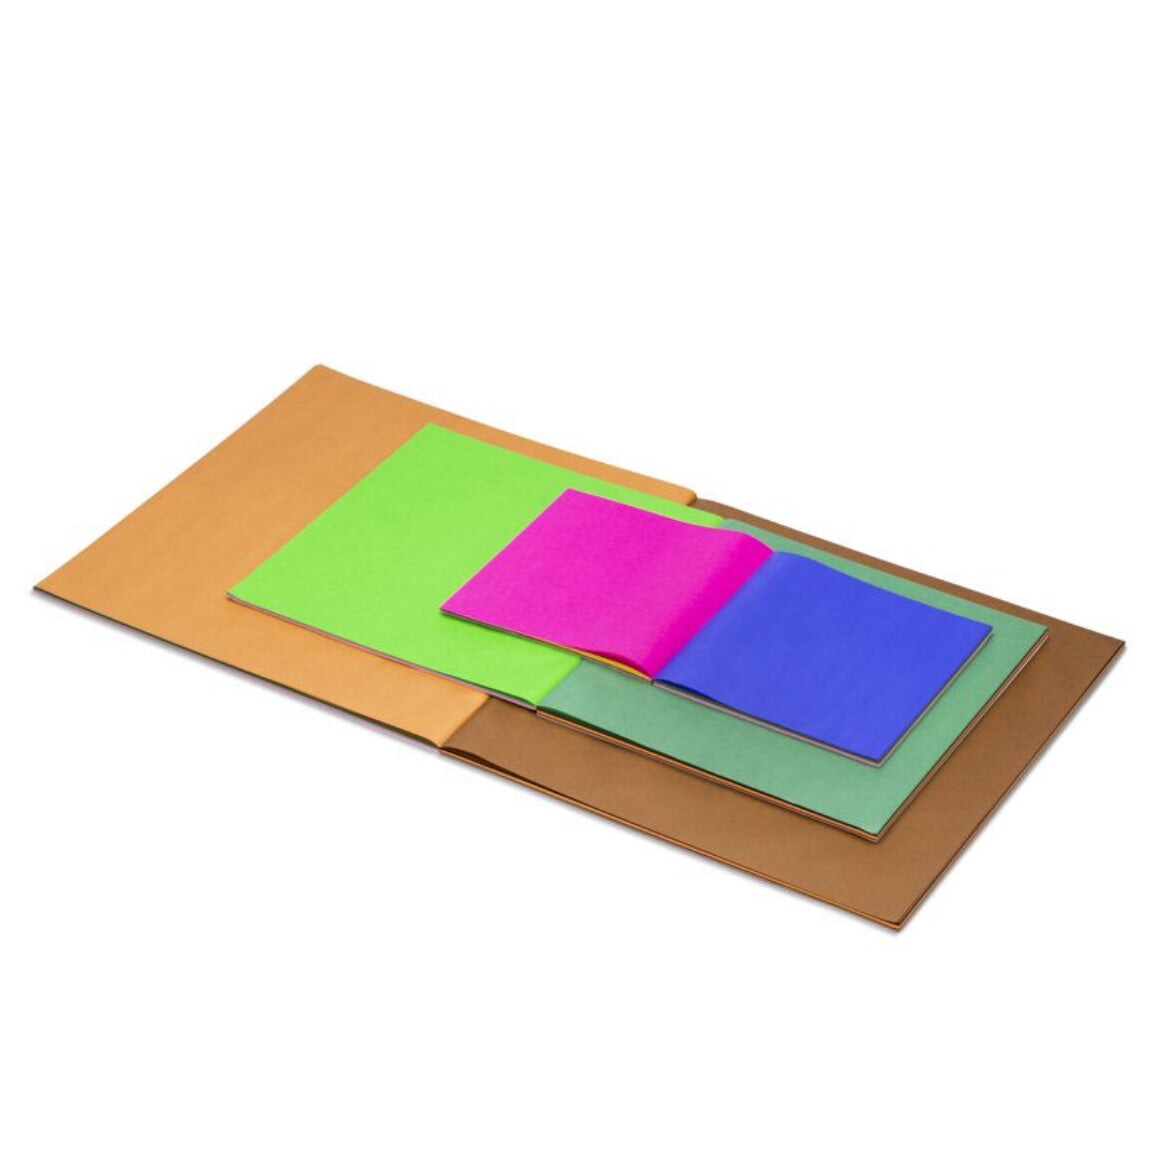 Japanese Silk Paper Blocks for Crafts, Colorful Tissue Paper - Alder & Alouette